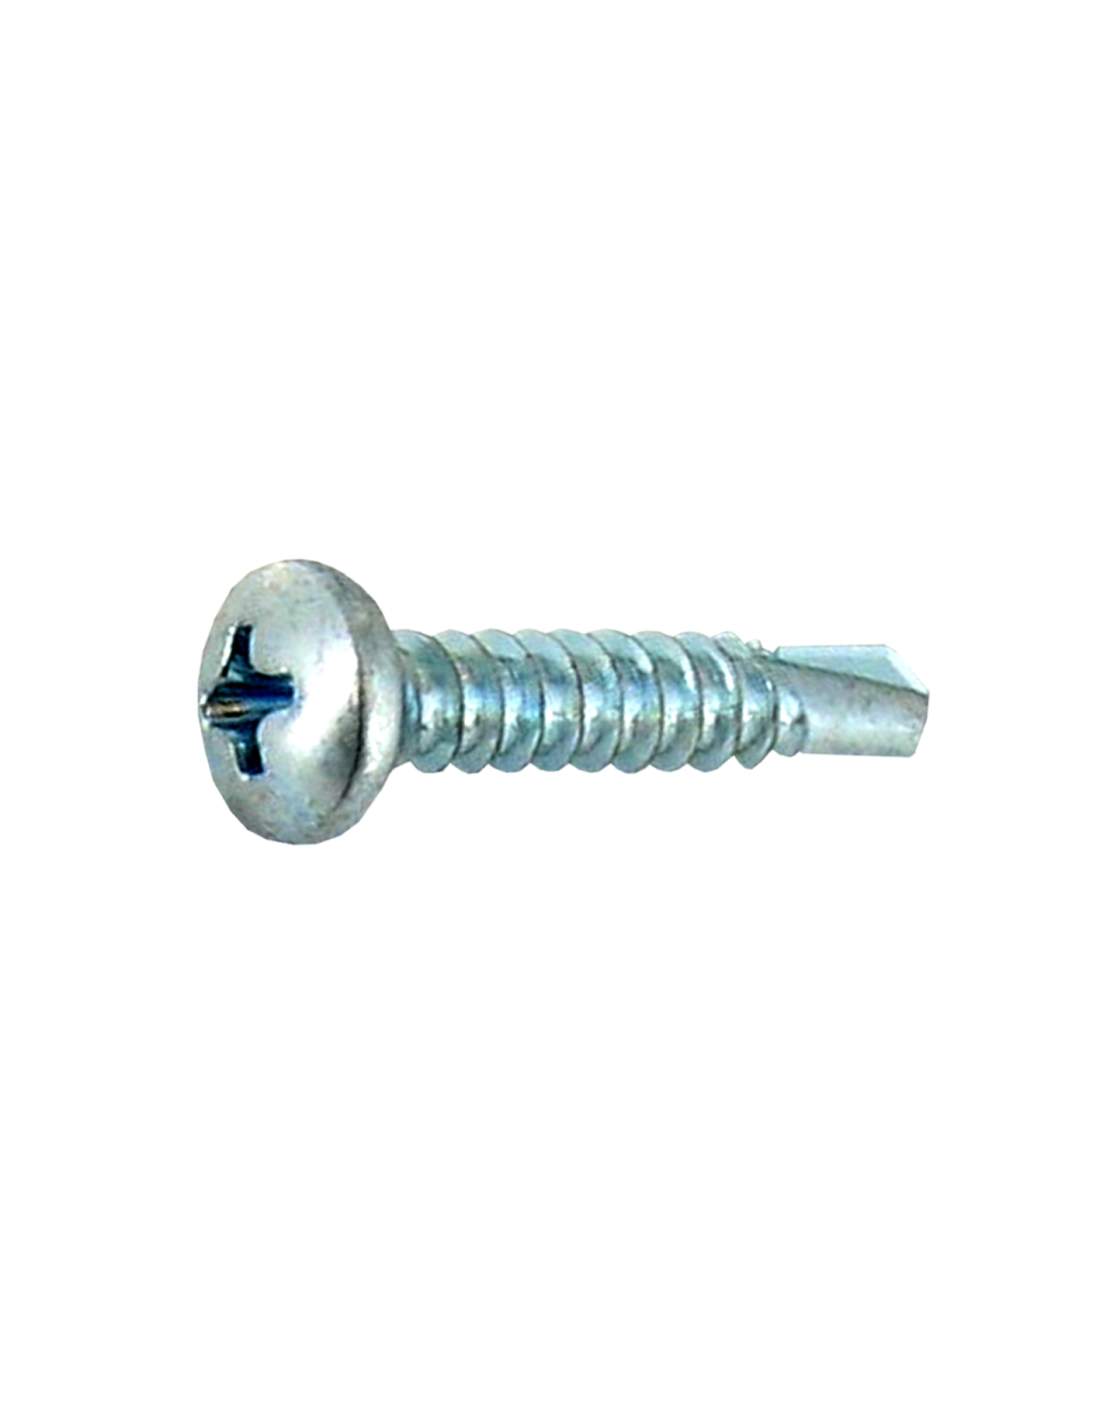 AZI 3.5x13 pan head self-drilling sheet metal screws, 31 pcs.